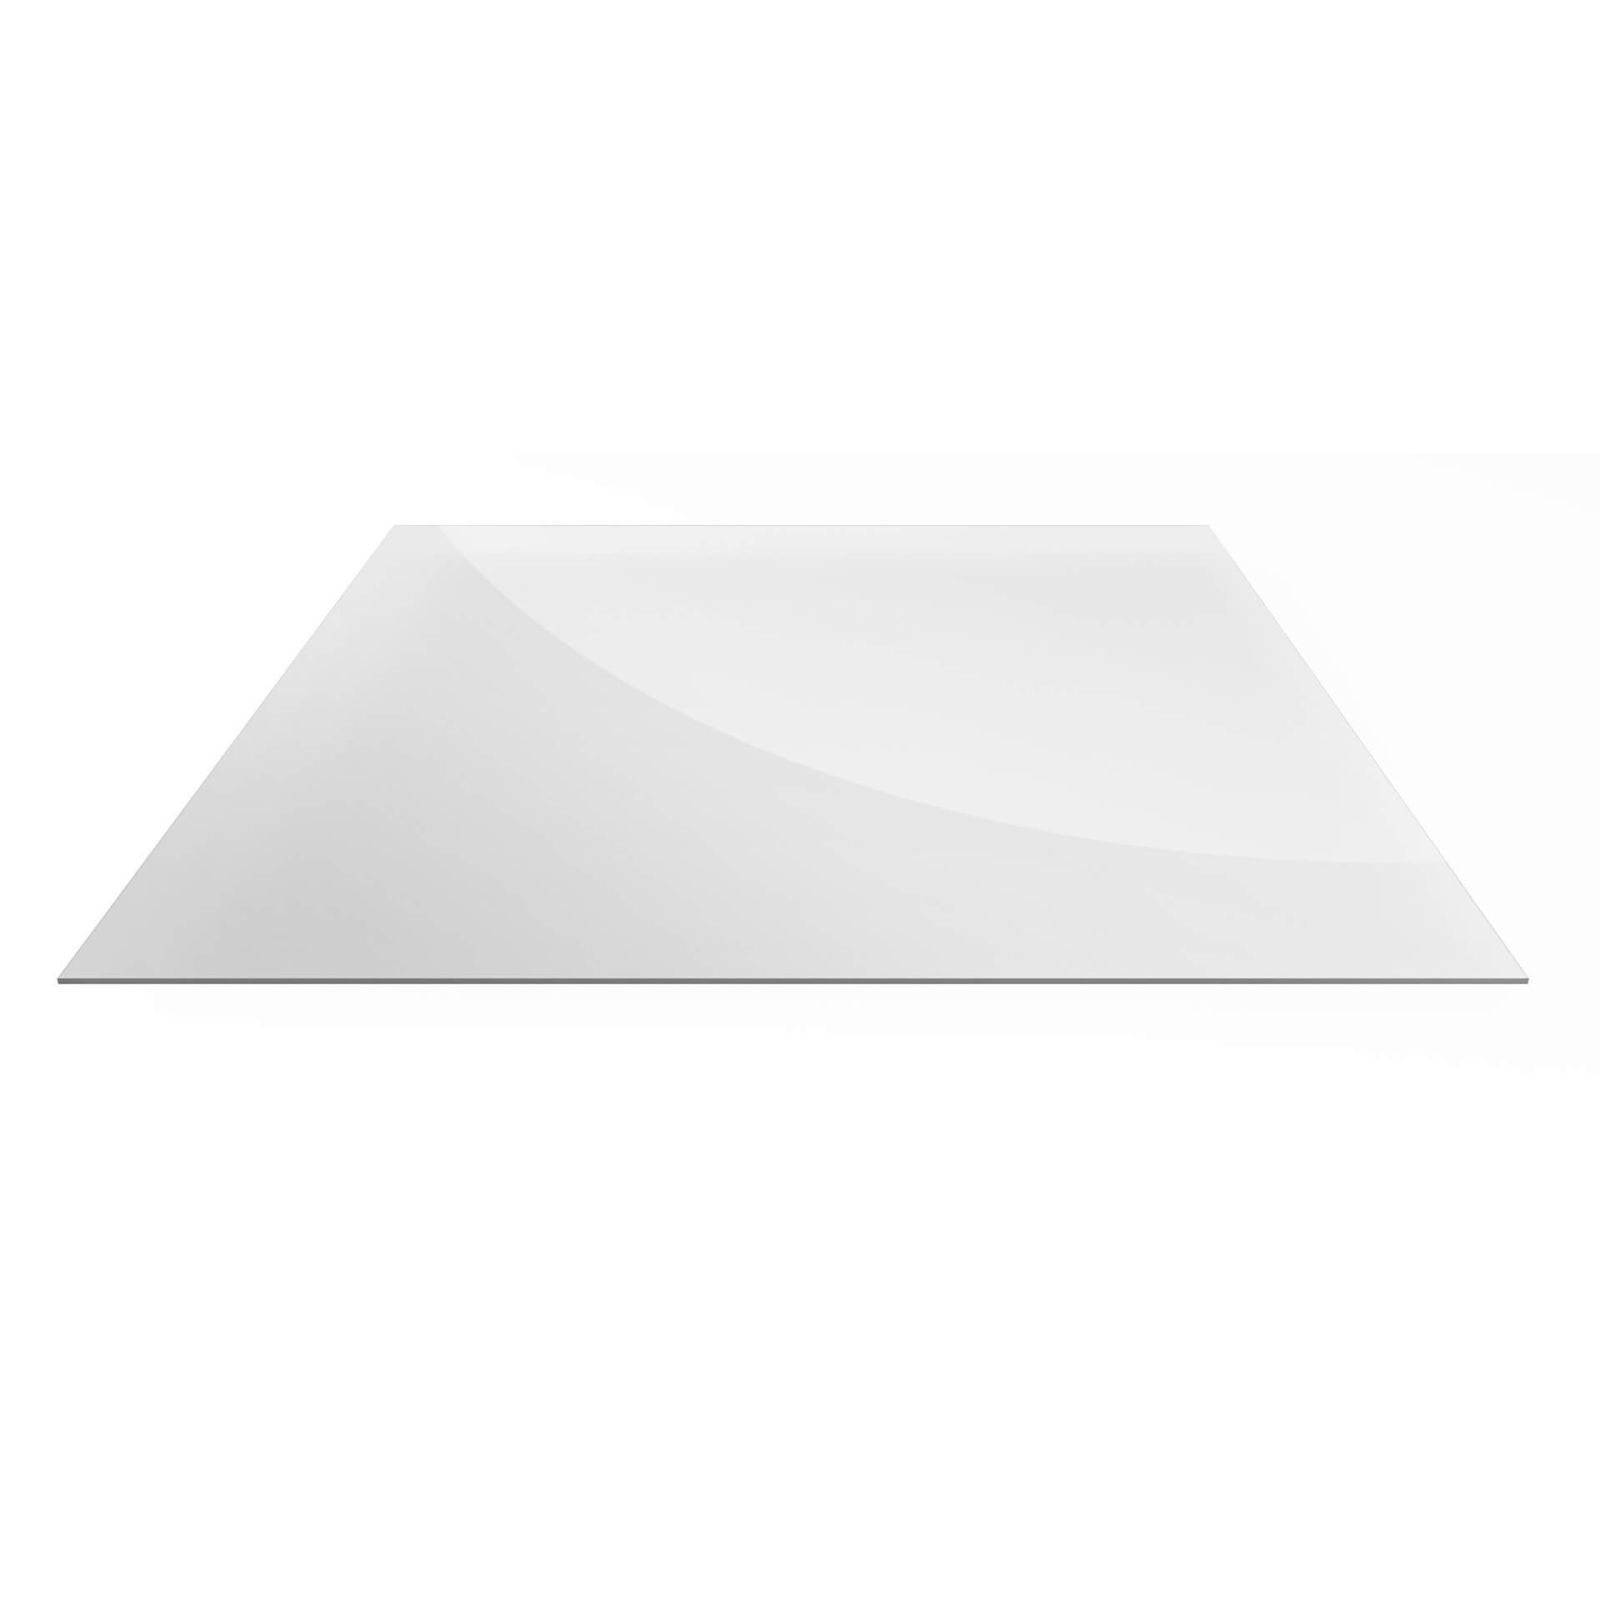 Polycarbonat Massivplatte | 6 mm | Glasklar | 1,00 x 1,00 m #1